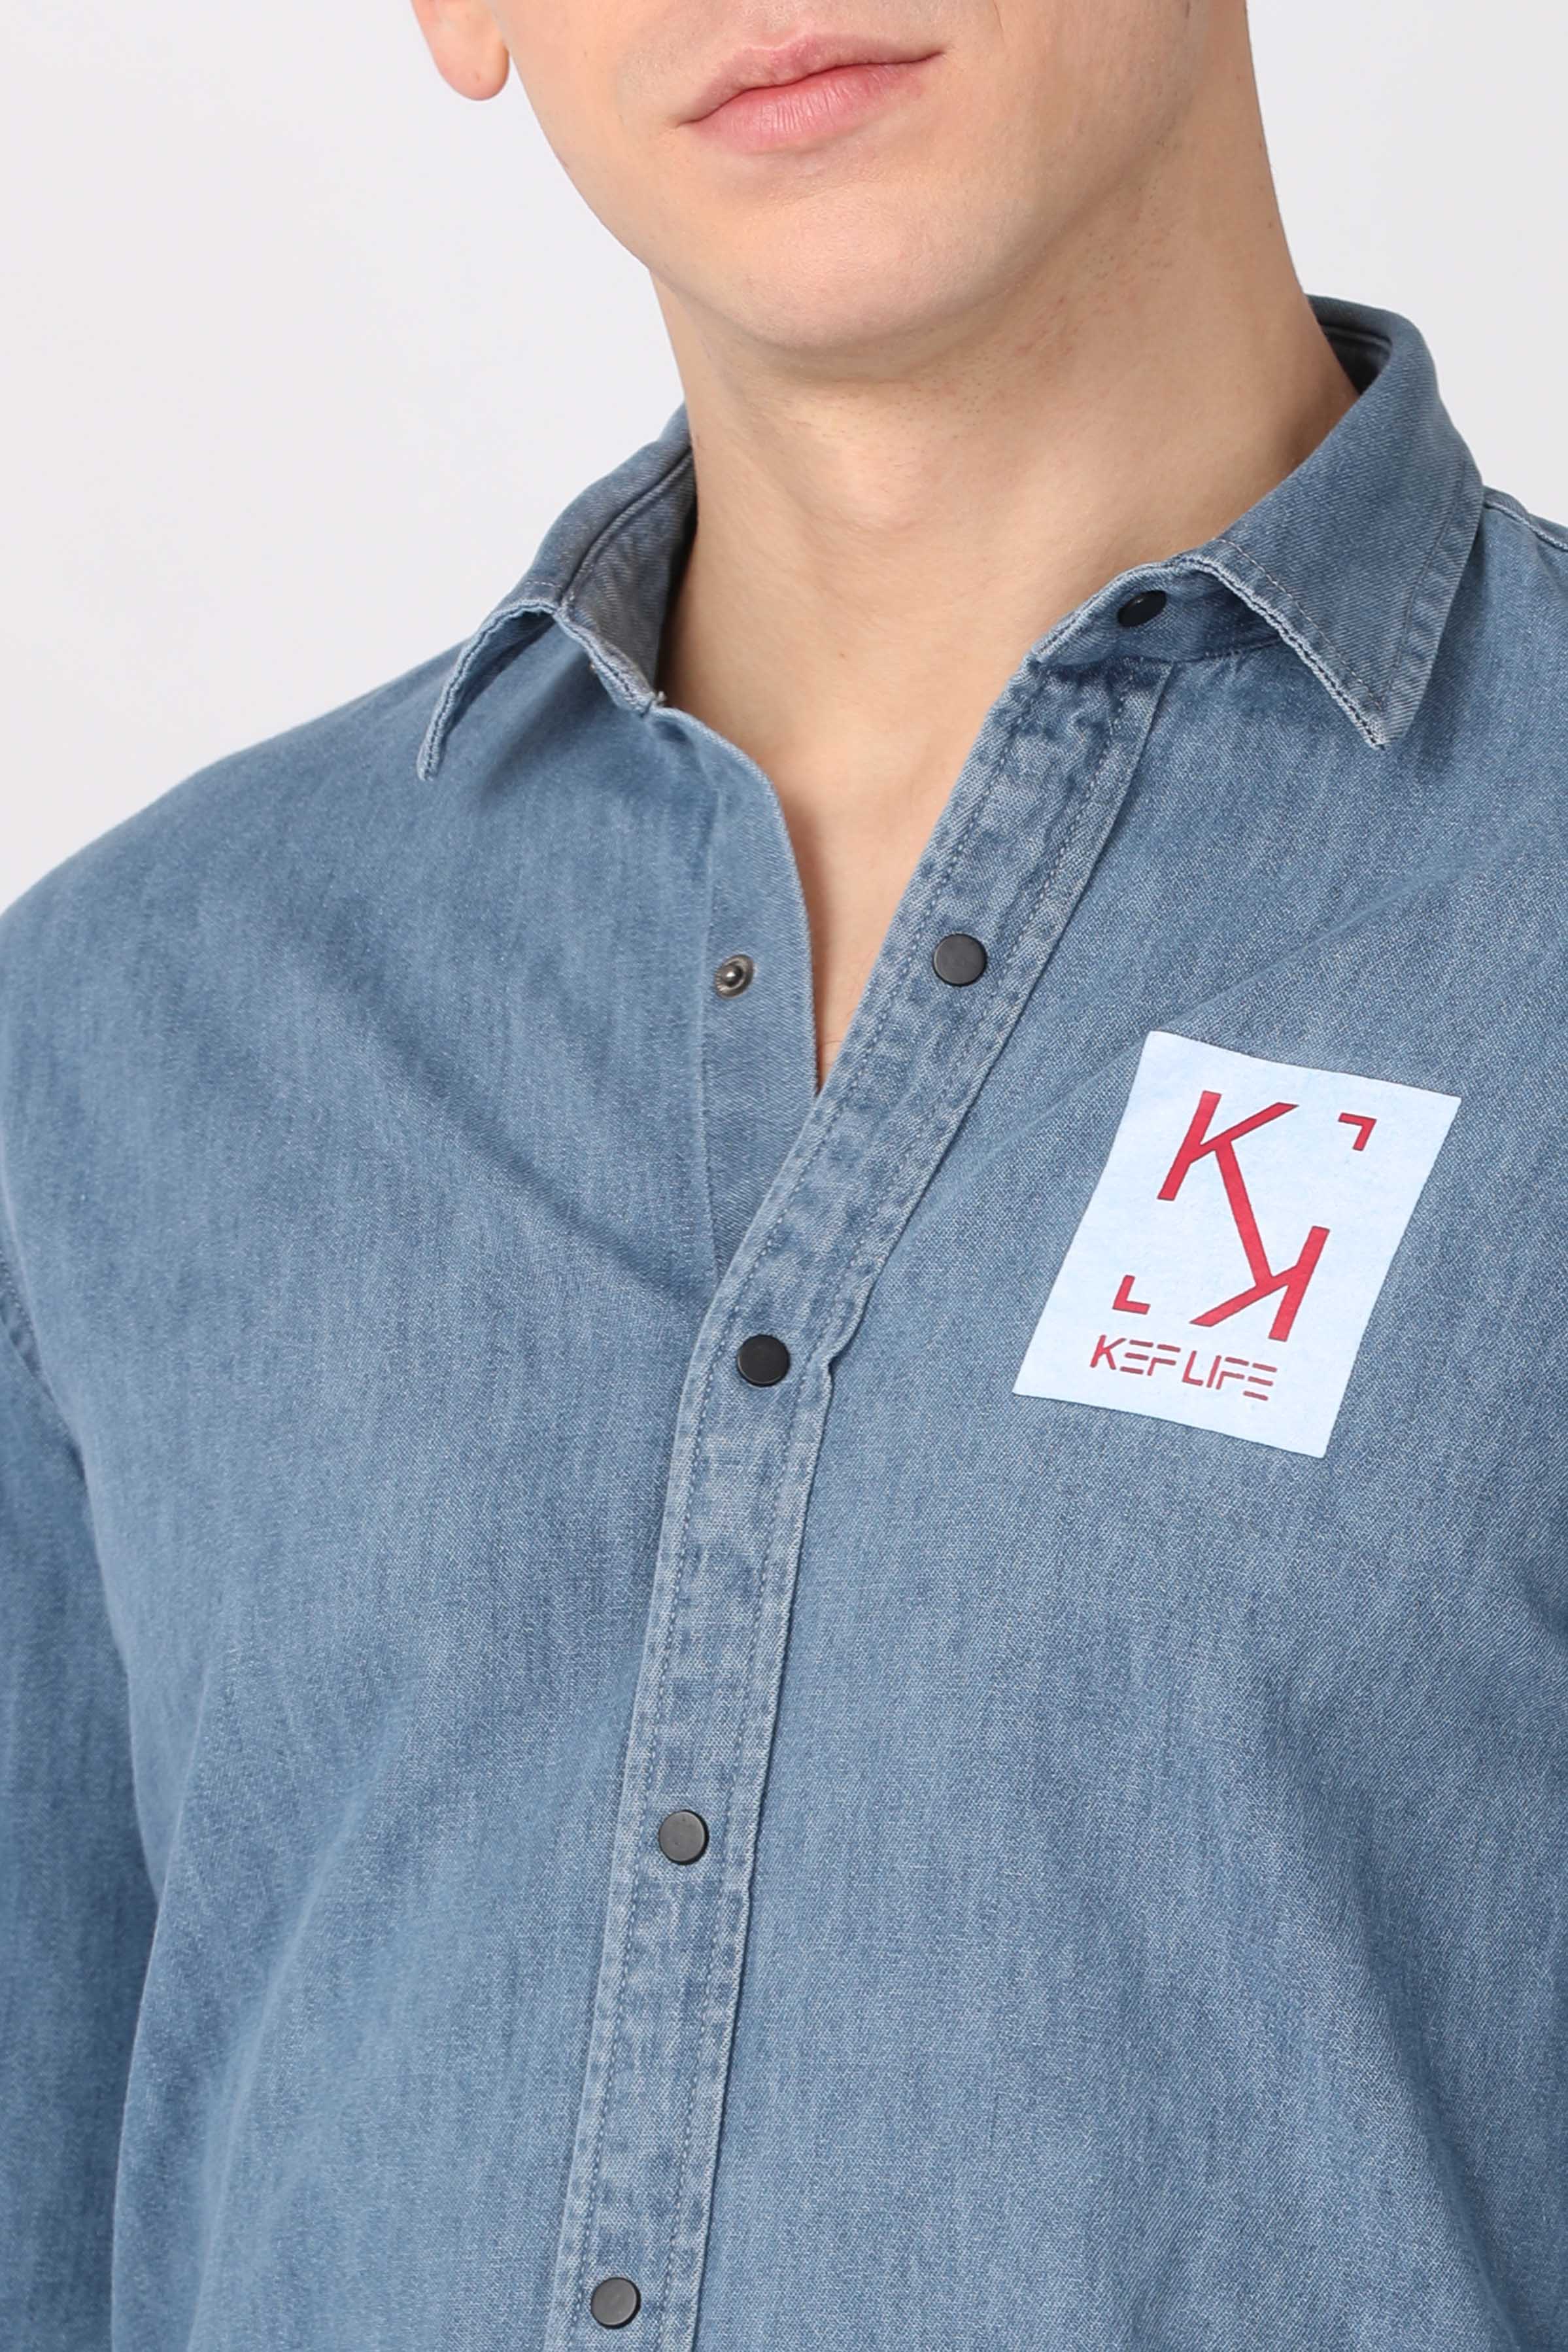 KEF LIFE Printed Denim Shirt Shirts KEF 